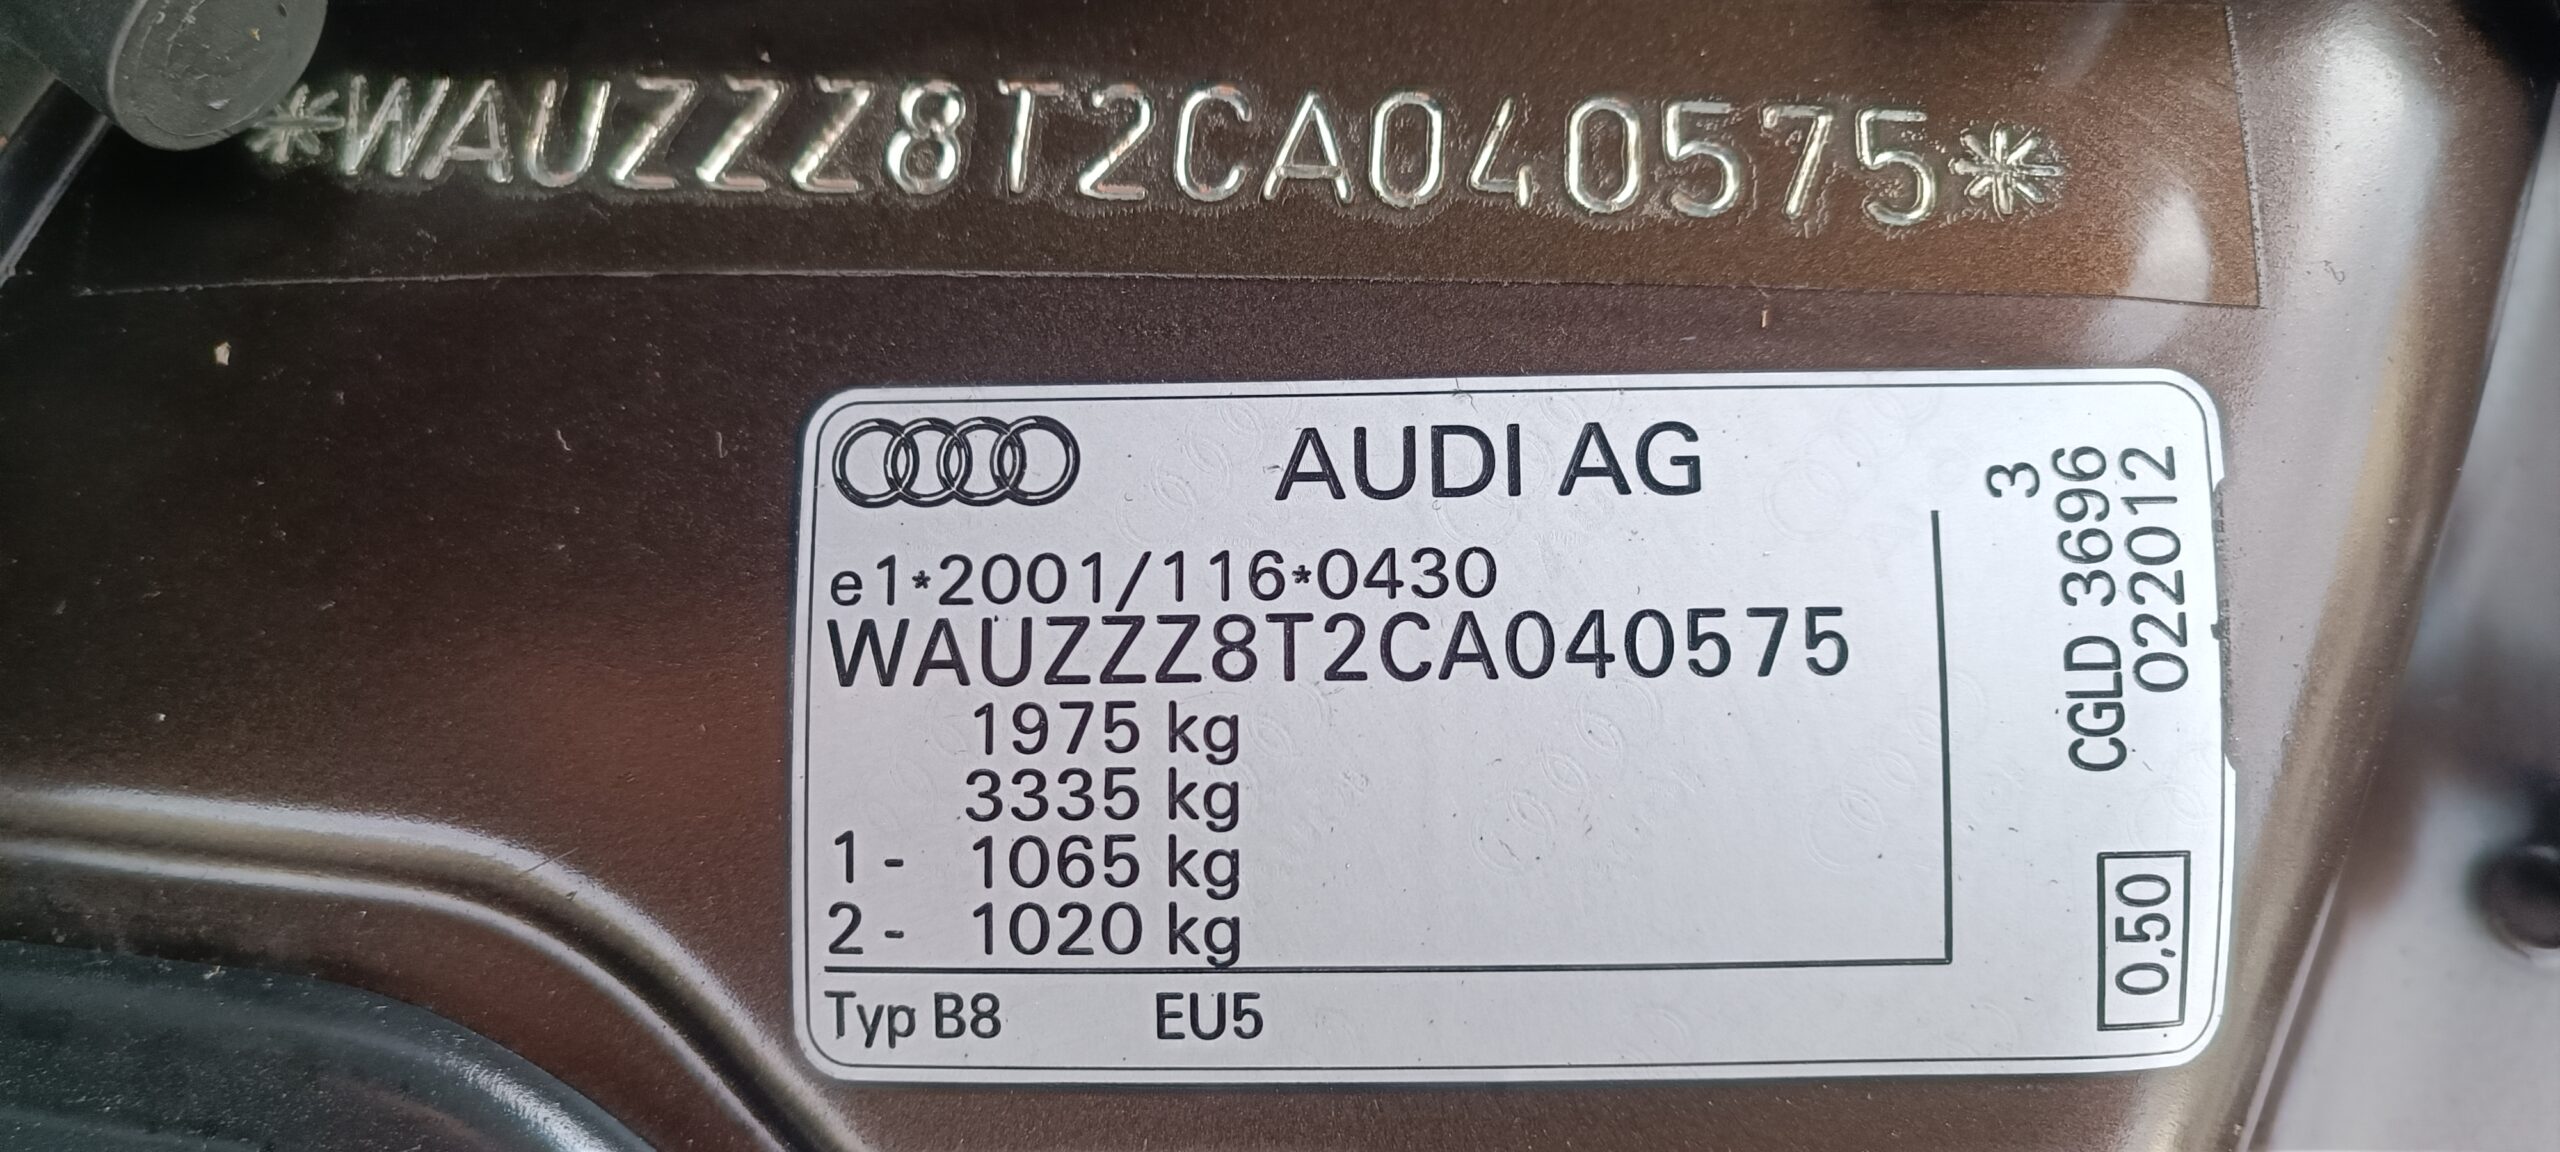 AUDI A5 SPORT COUPE, 2. 0 TDI, 163 CP, EURO 5, AN 2012